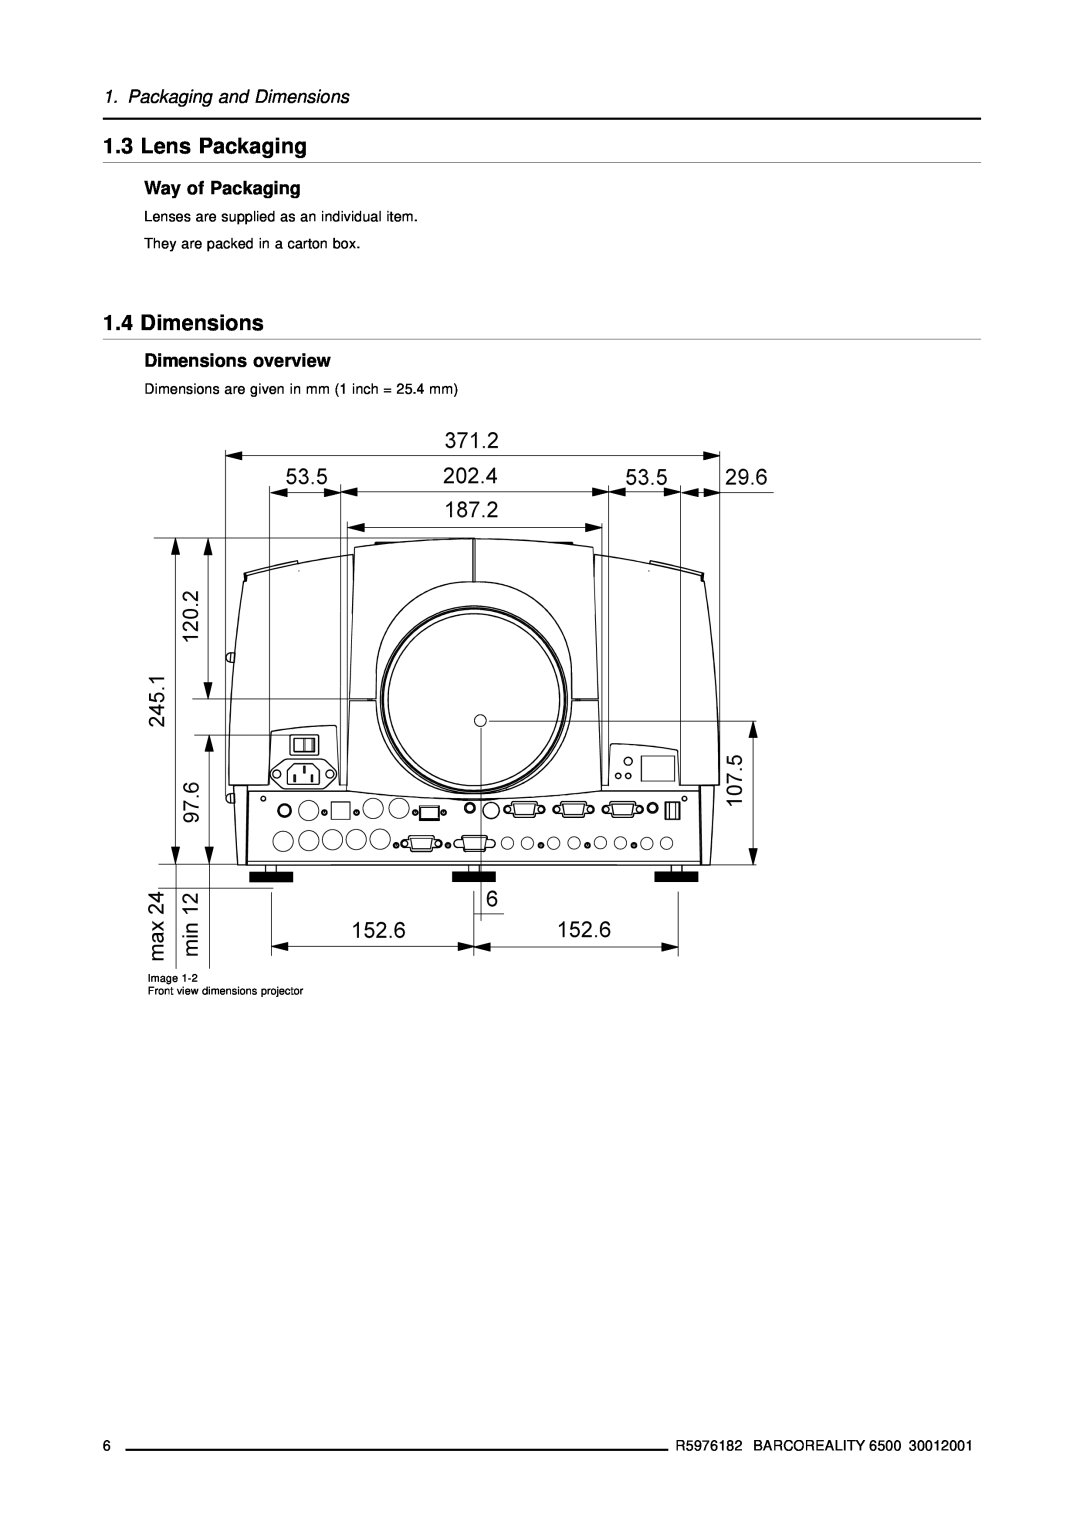 Barco R9001960 owner manual Lens Packaging, Dimensions overview, Packaging and Dimensions, Way of Packaging 